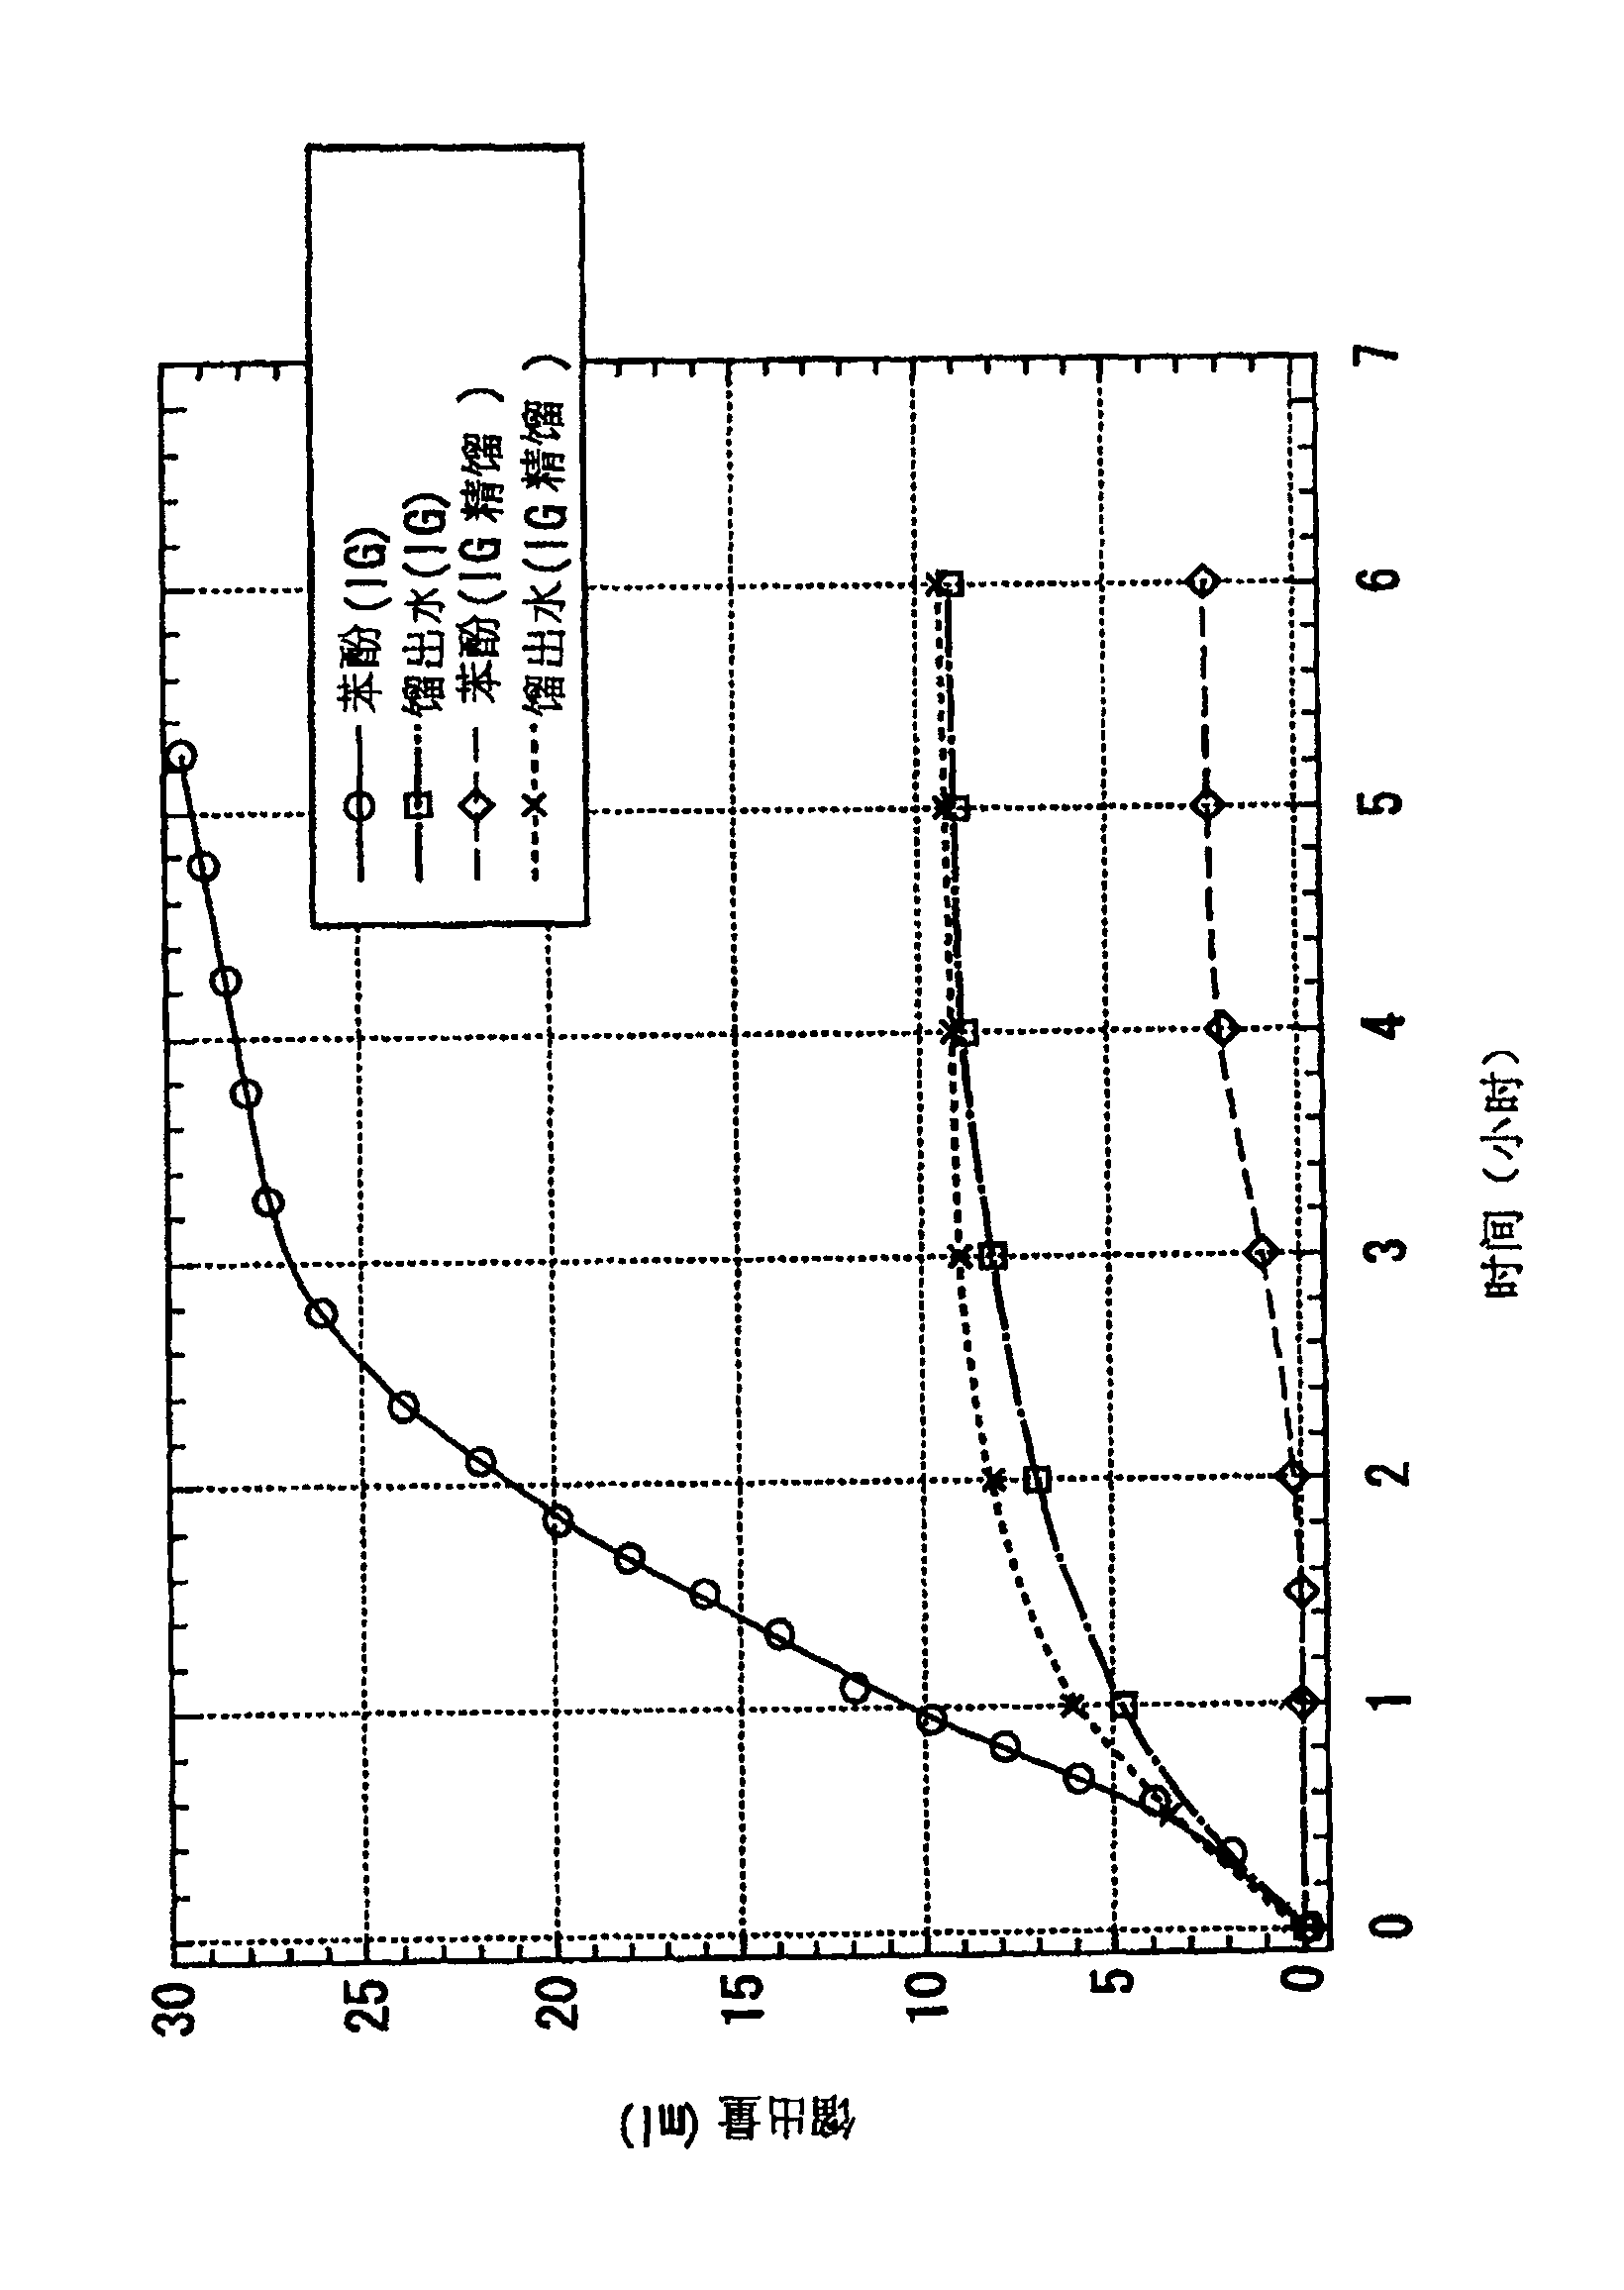 Production of 4,4'-bisphenol sulphone